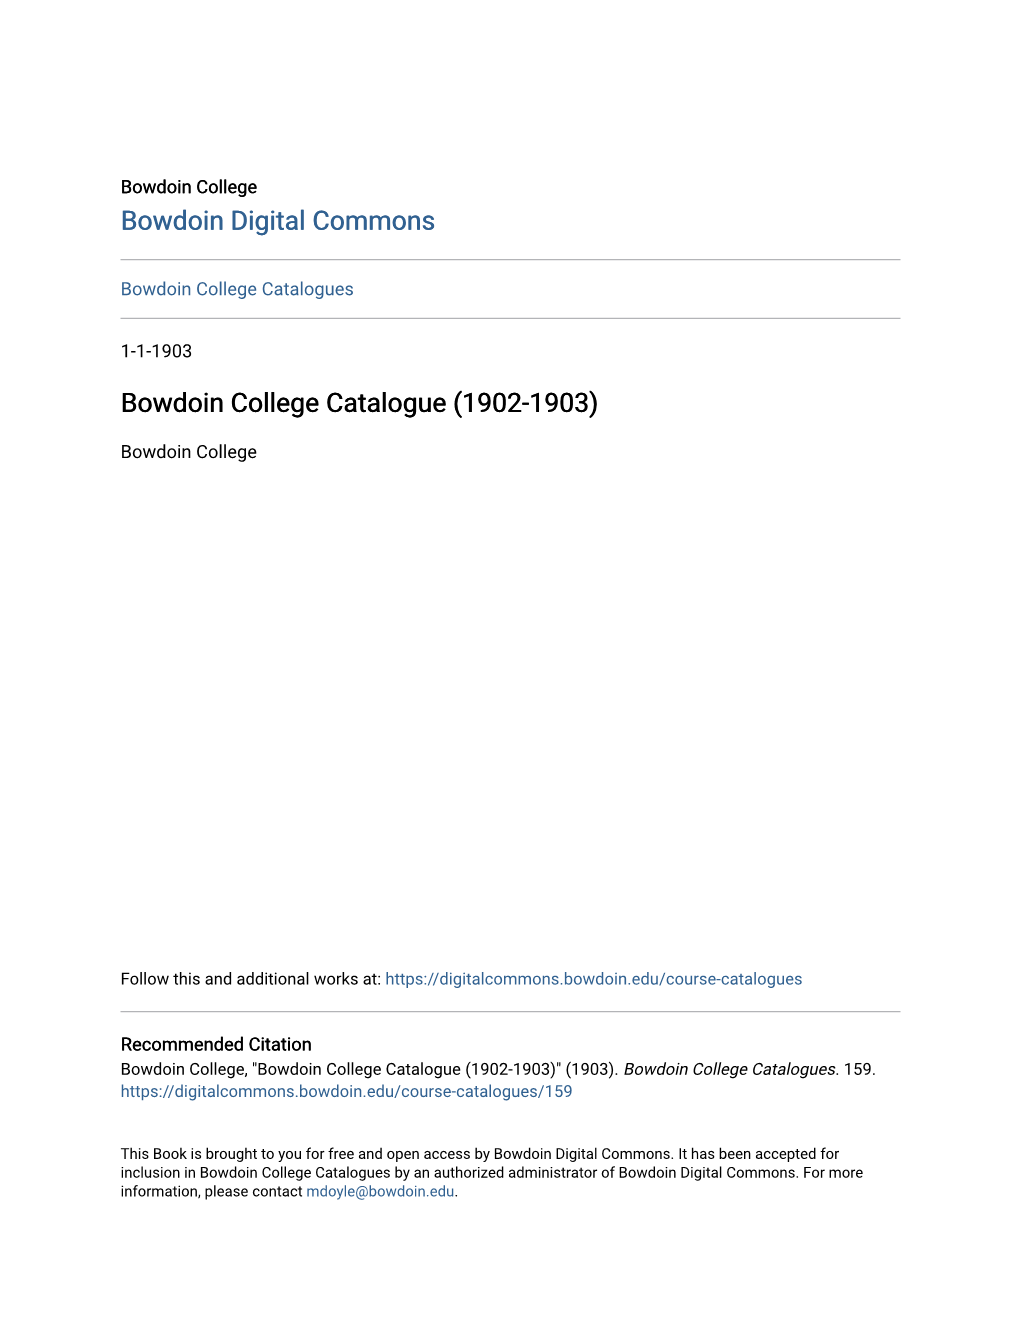 Bowdoin College Catalogue (1902-1903)